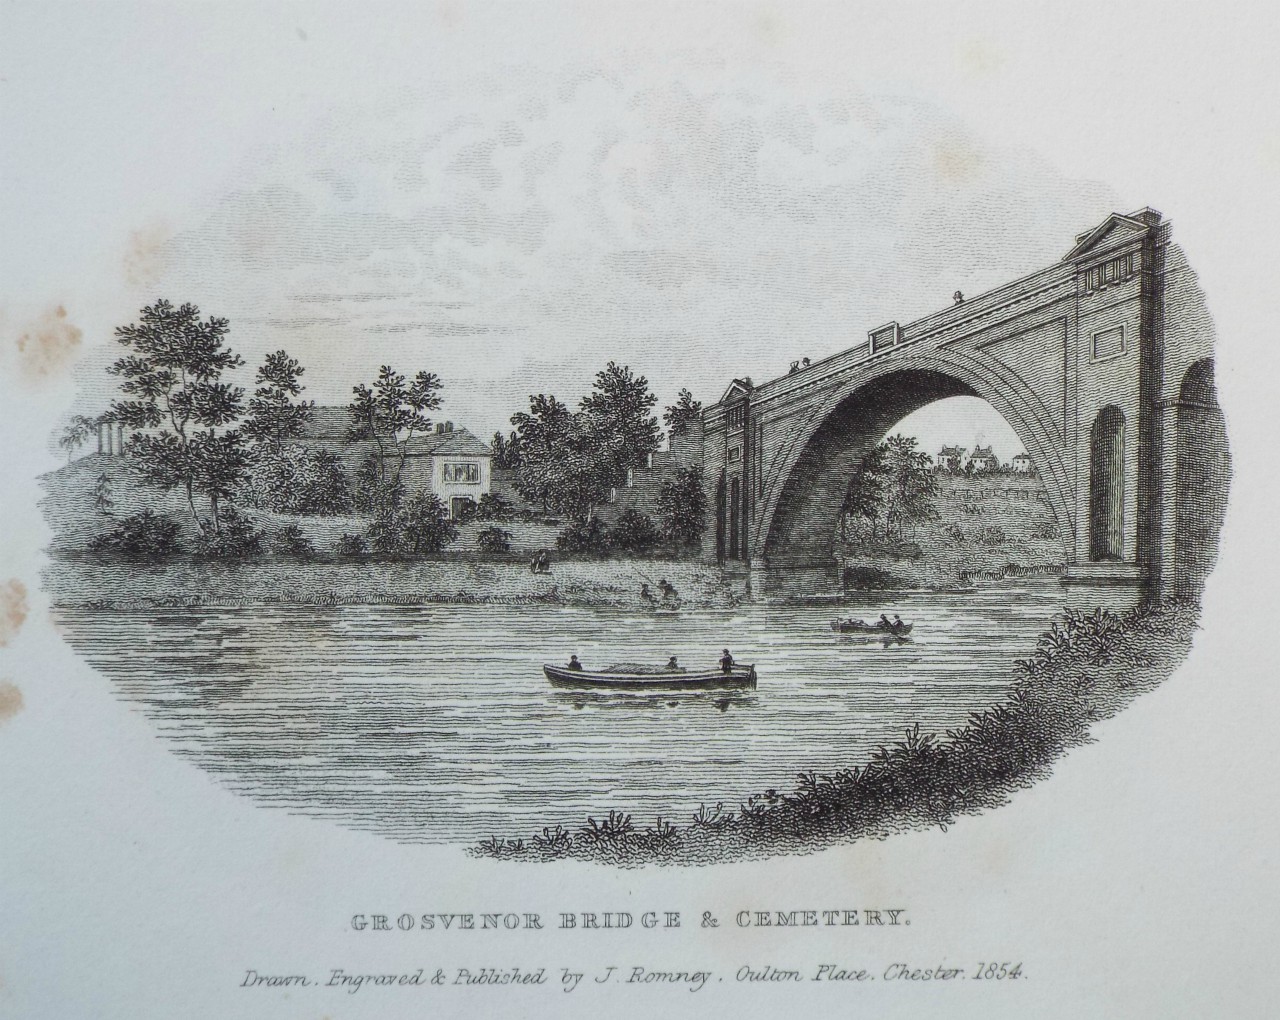 Print - Grosvenor Bridge & Cemetery. - Romney